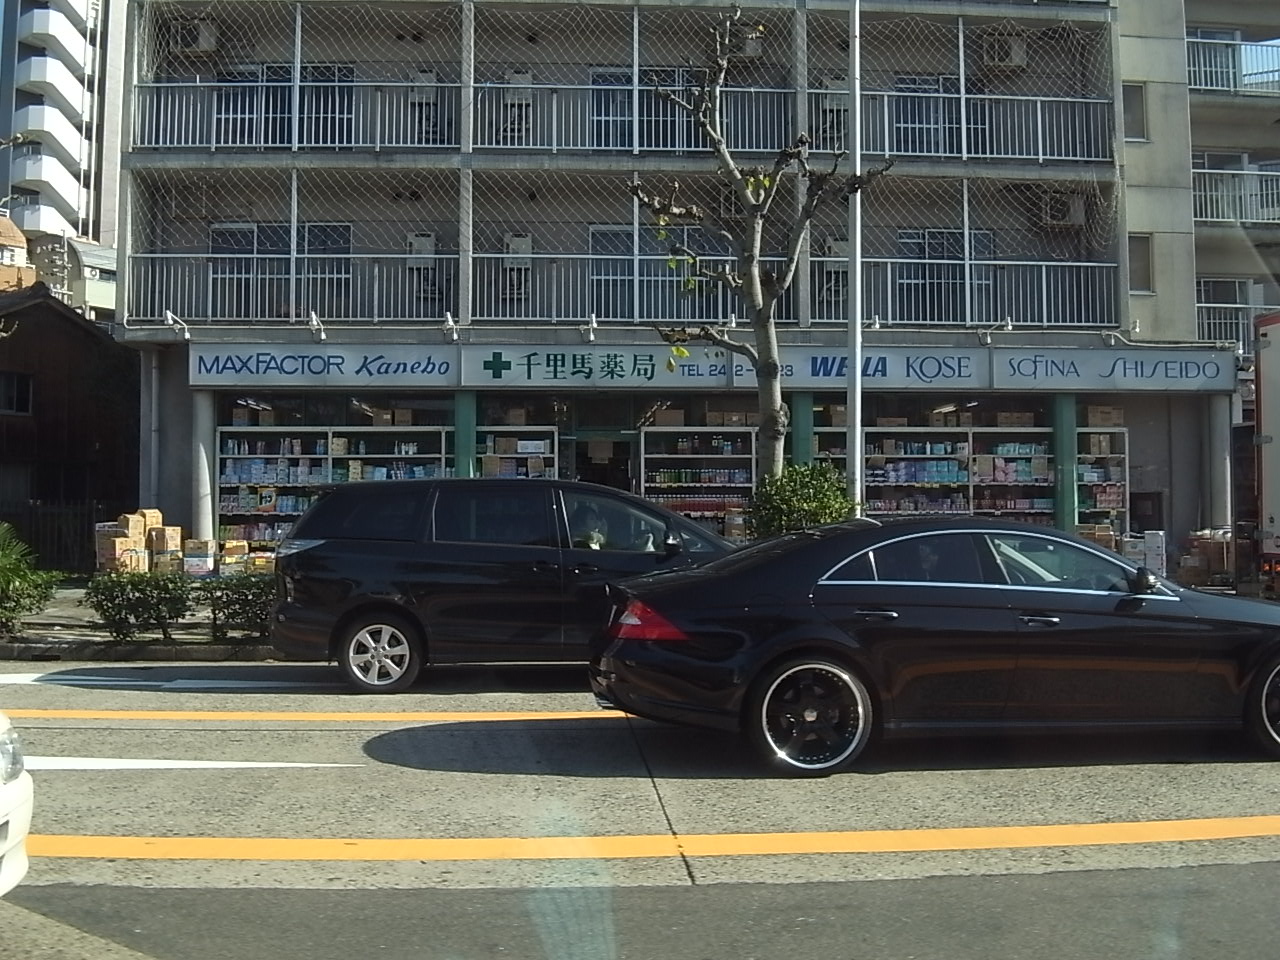 Dorakkusutoa. Chisato horse pharmacy Shinyoung shop 210m until (drugstore)